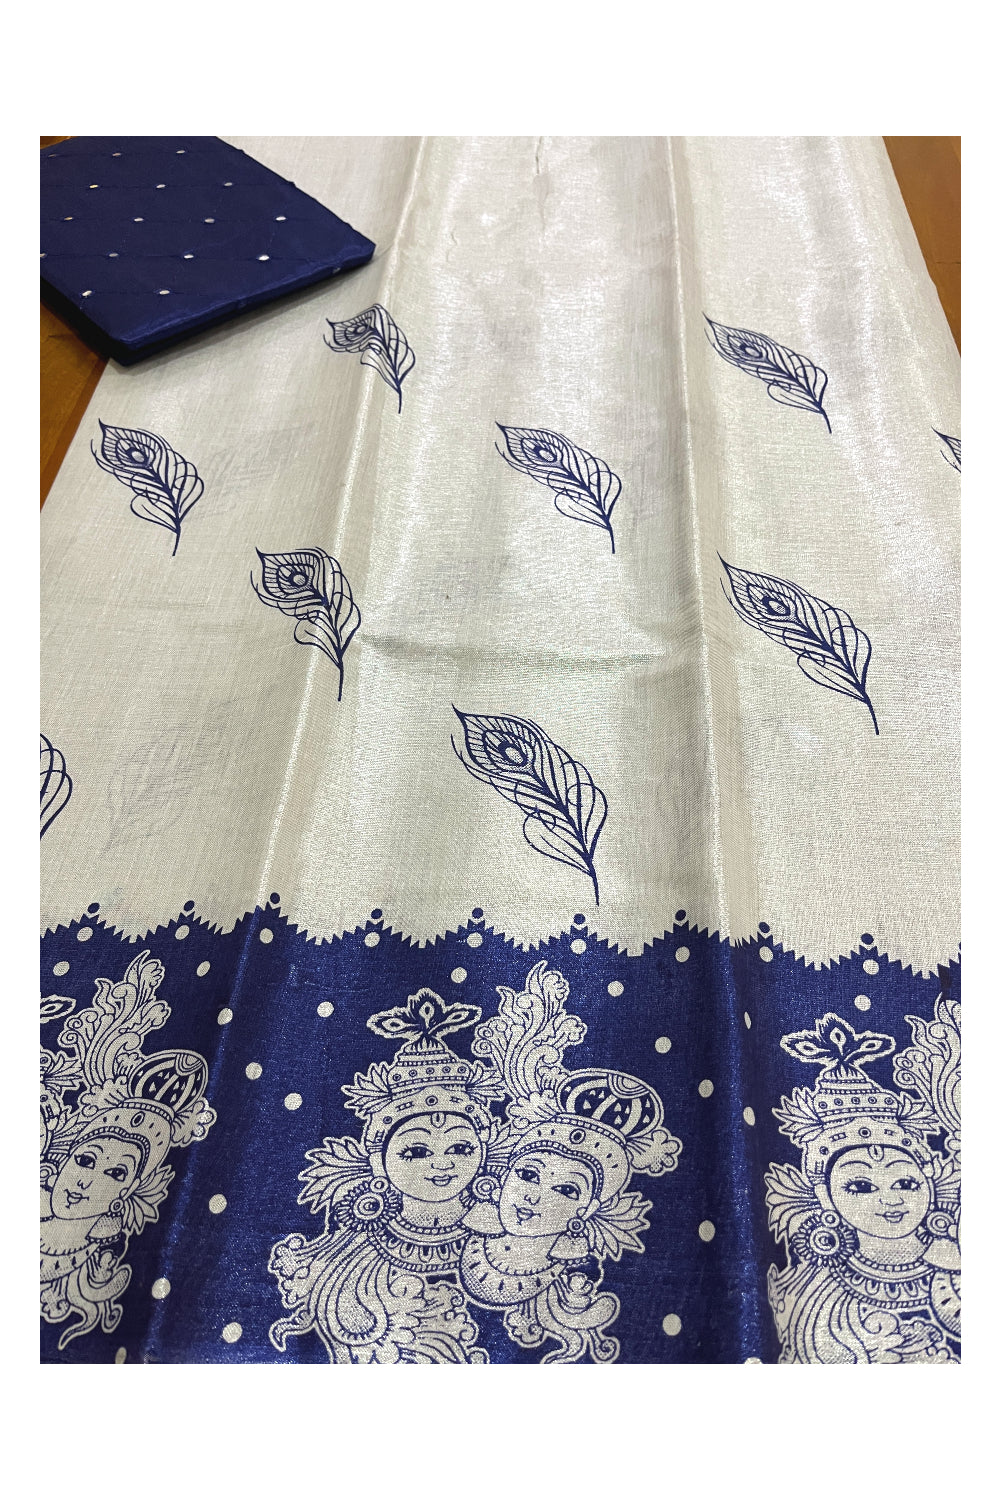 Kerala Silver Tissue Block Printed Pavada and Blue Designer Blouse Material for Kids/Girls 4.3 Meters